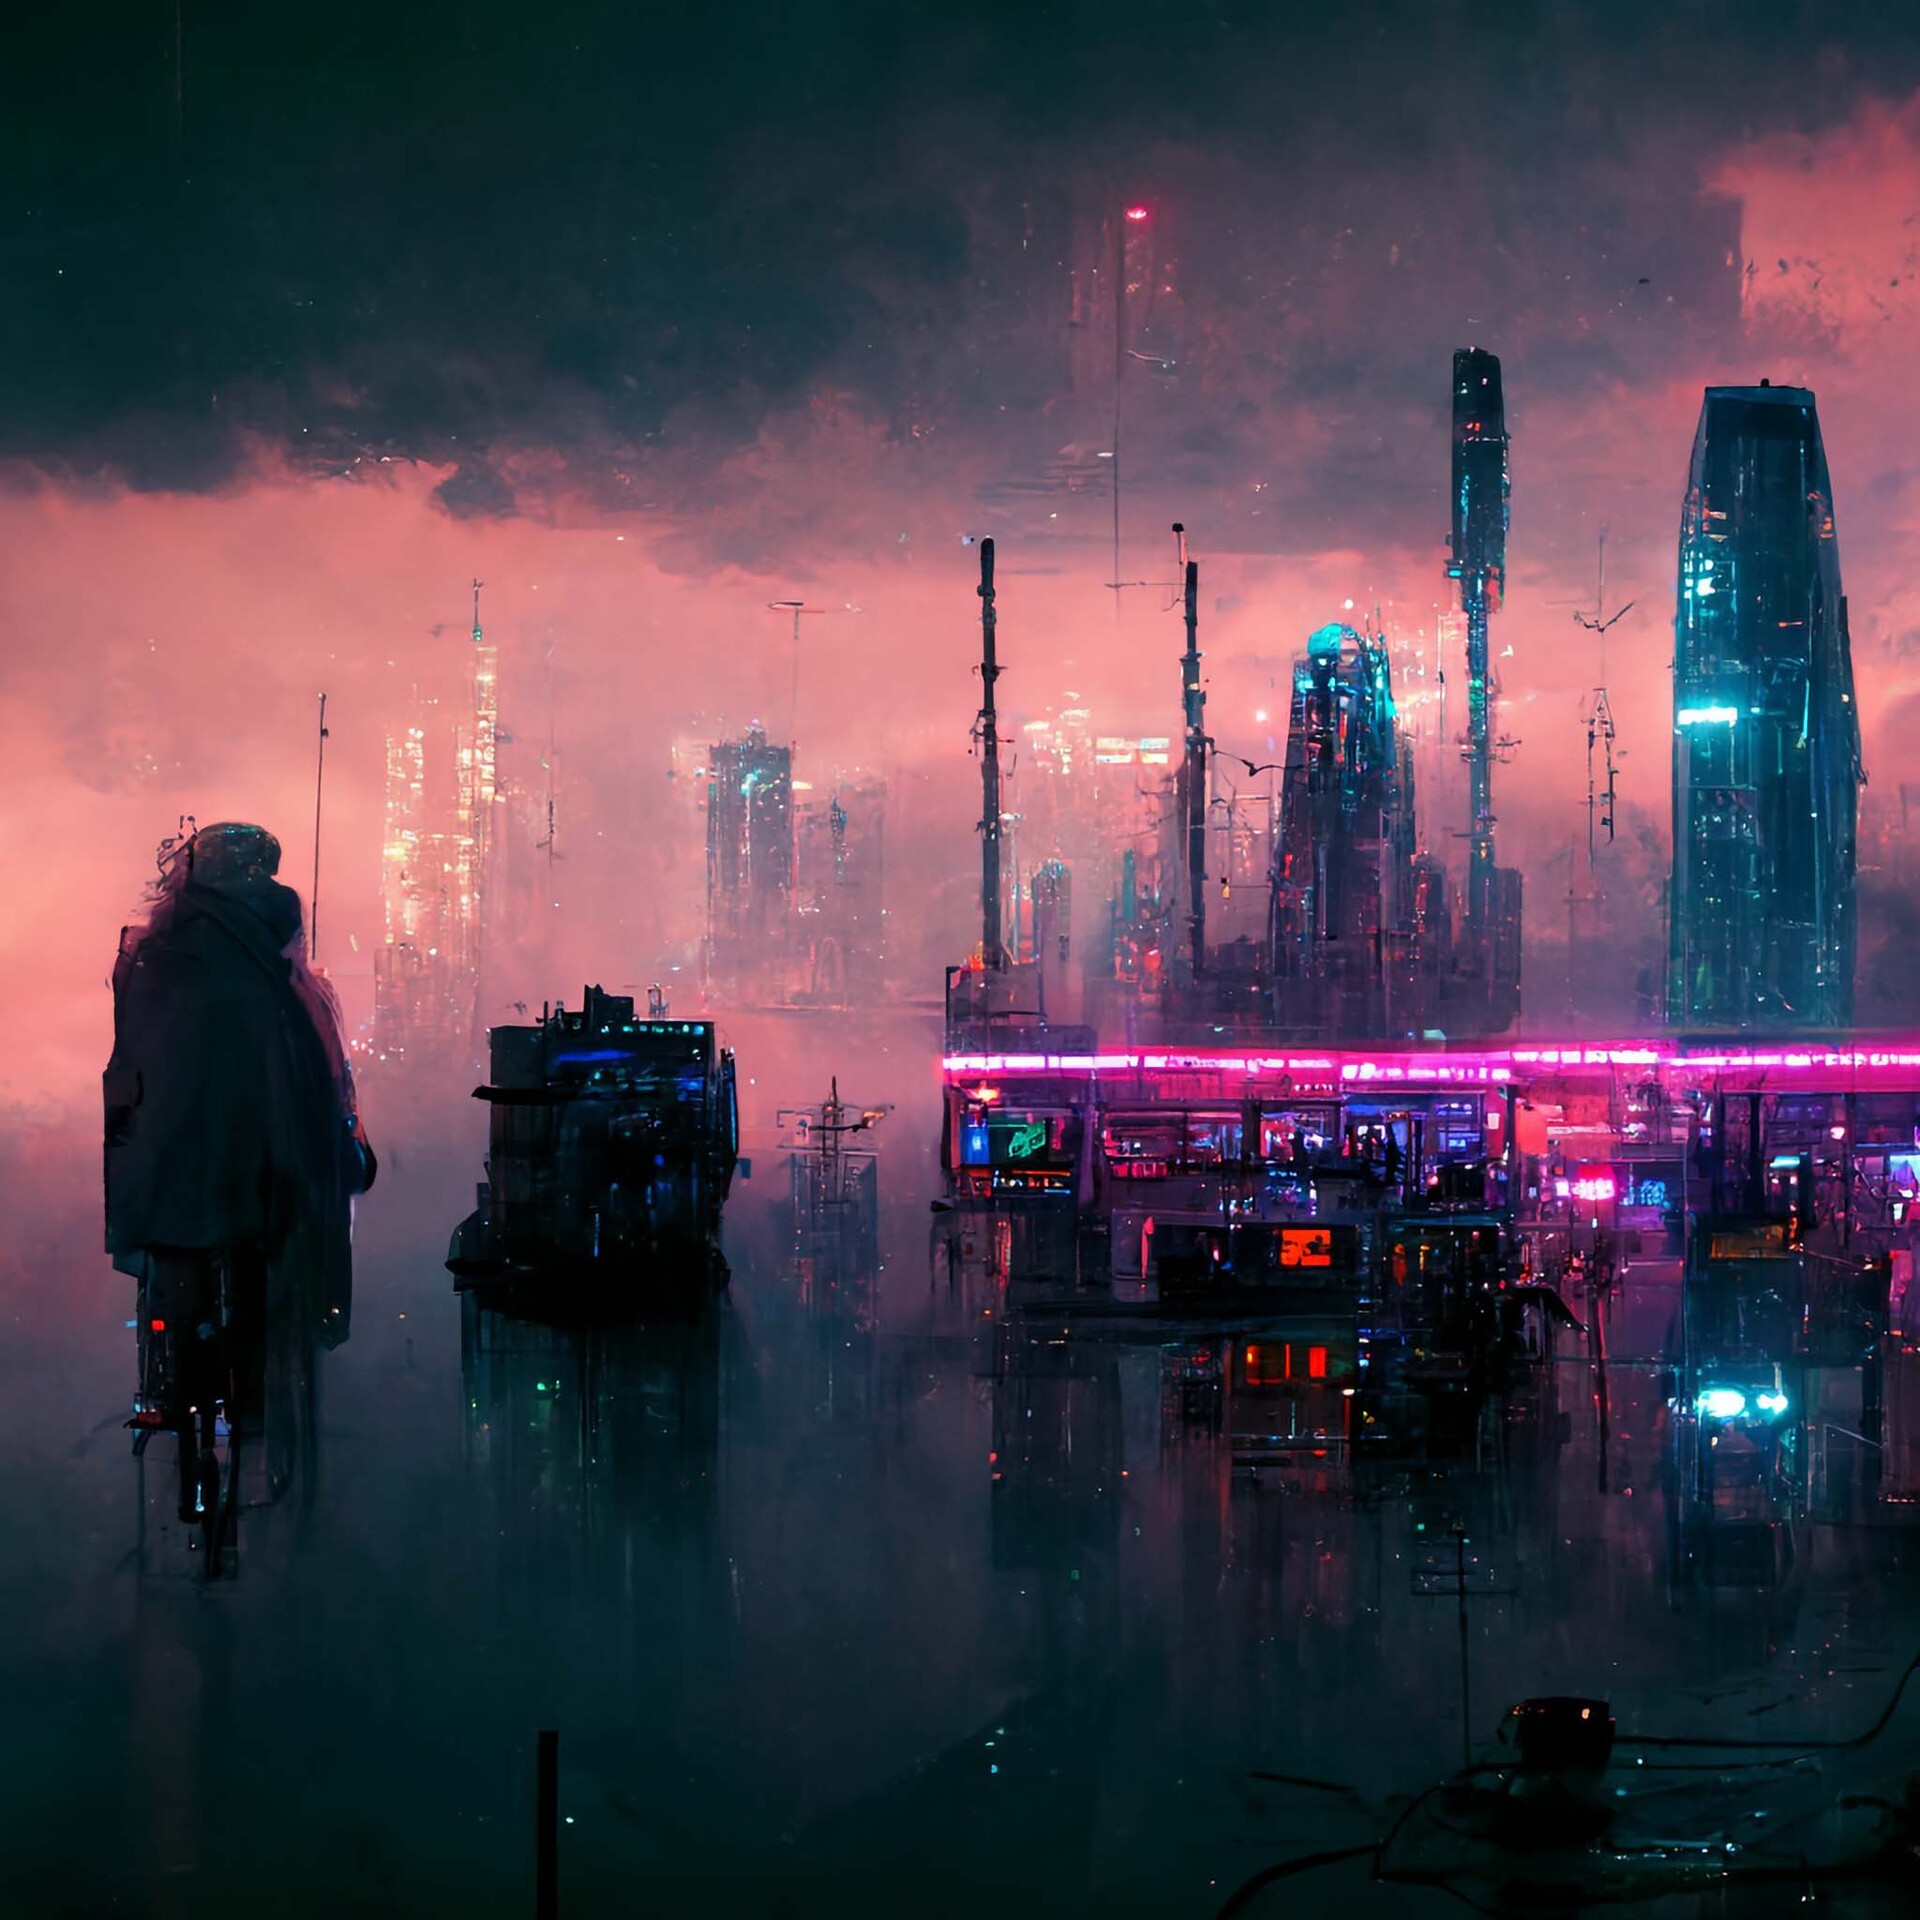 ArtStation - Cyberpunk Cities